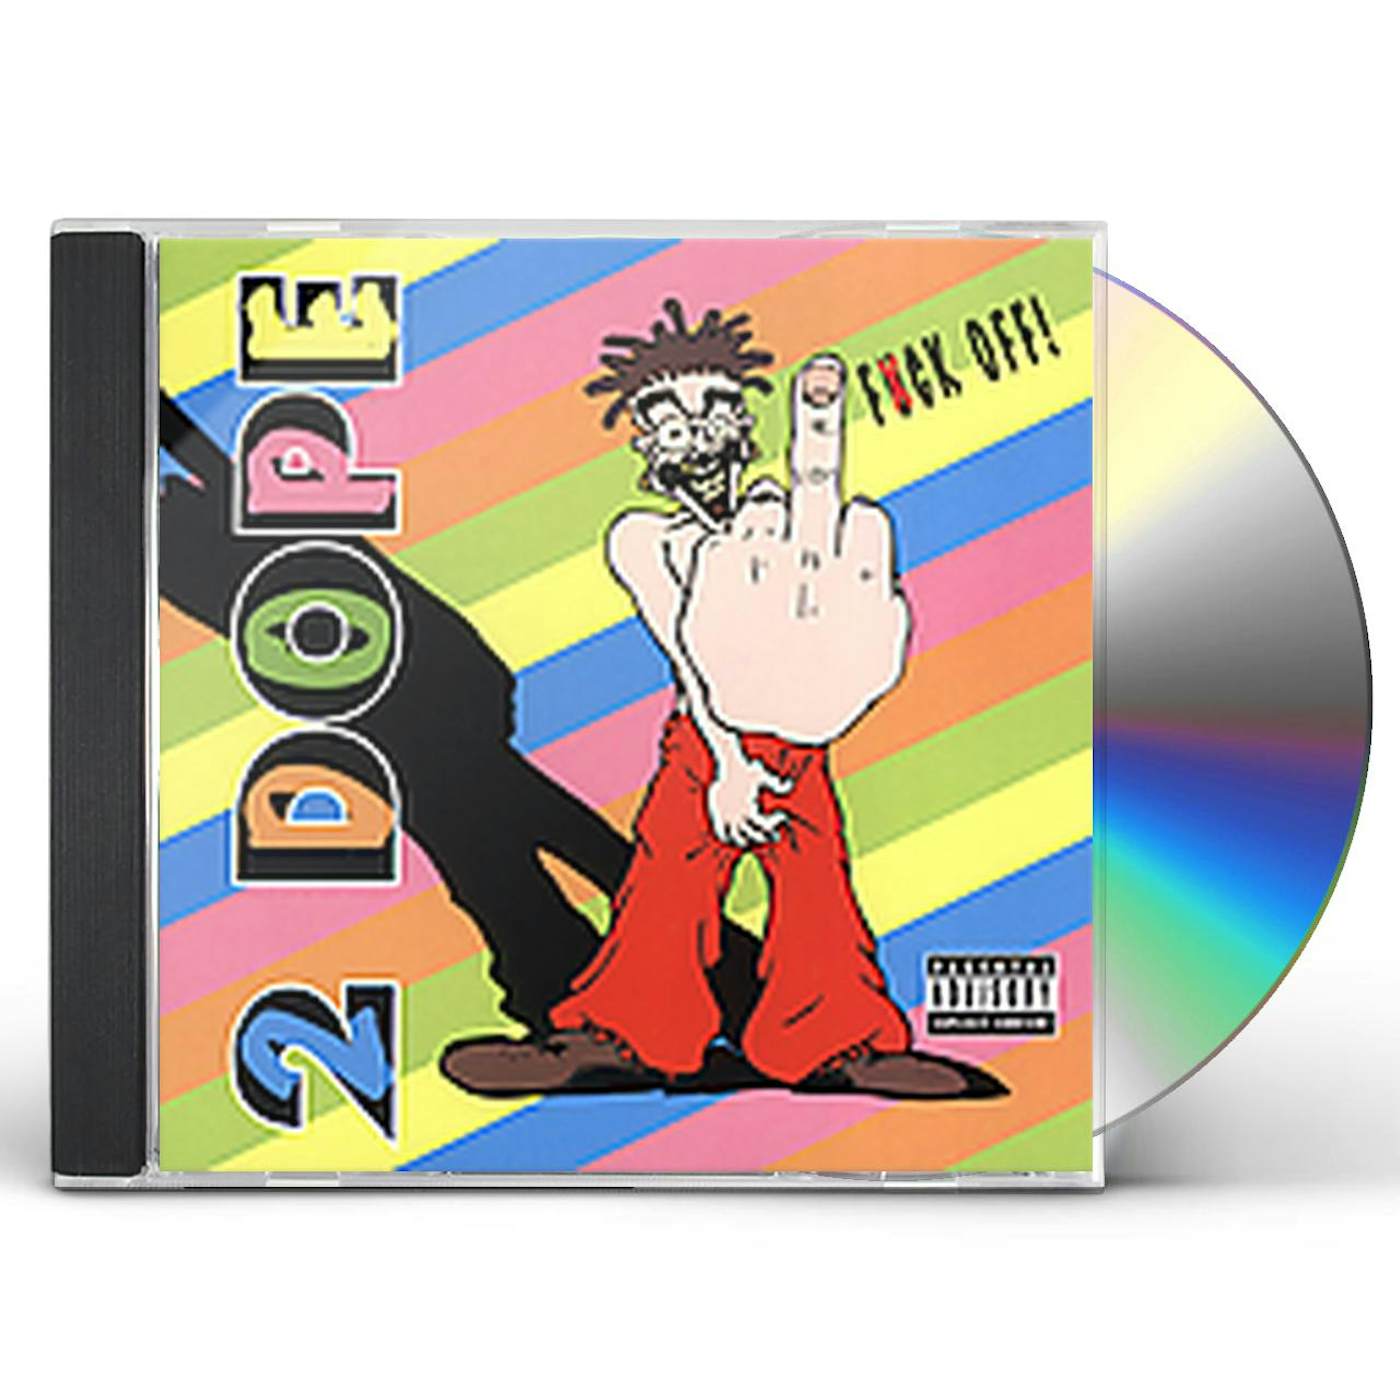 Shaggy 2 Dope FUCK OFF CD